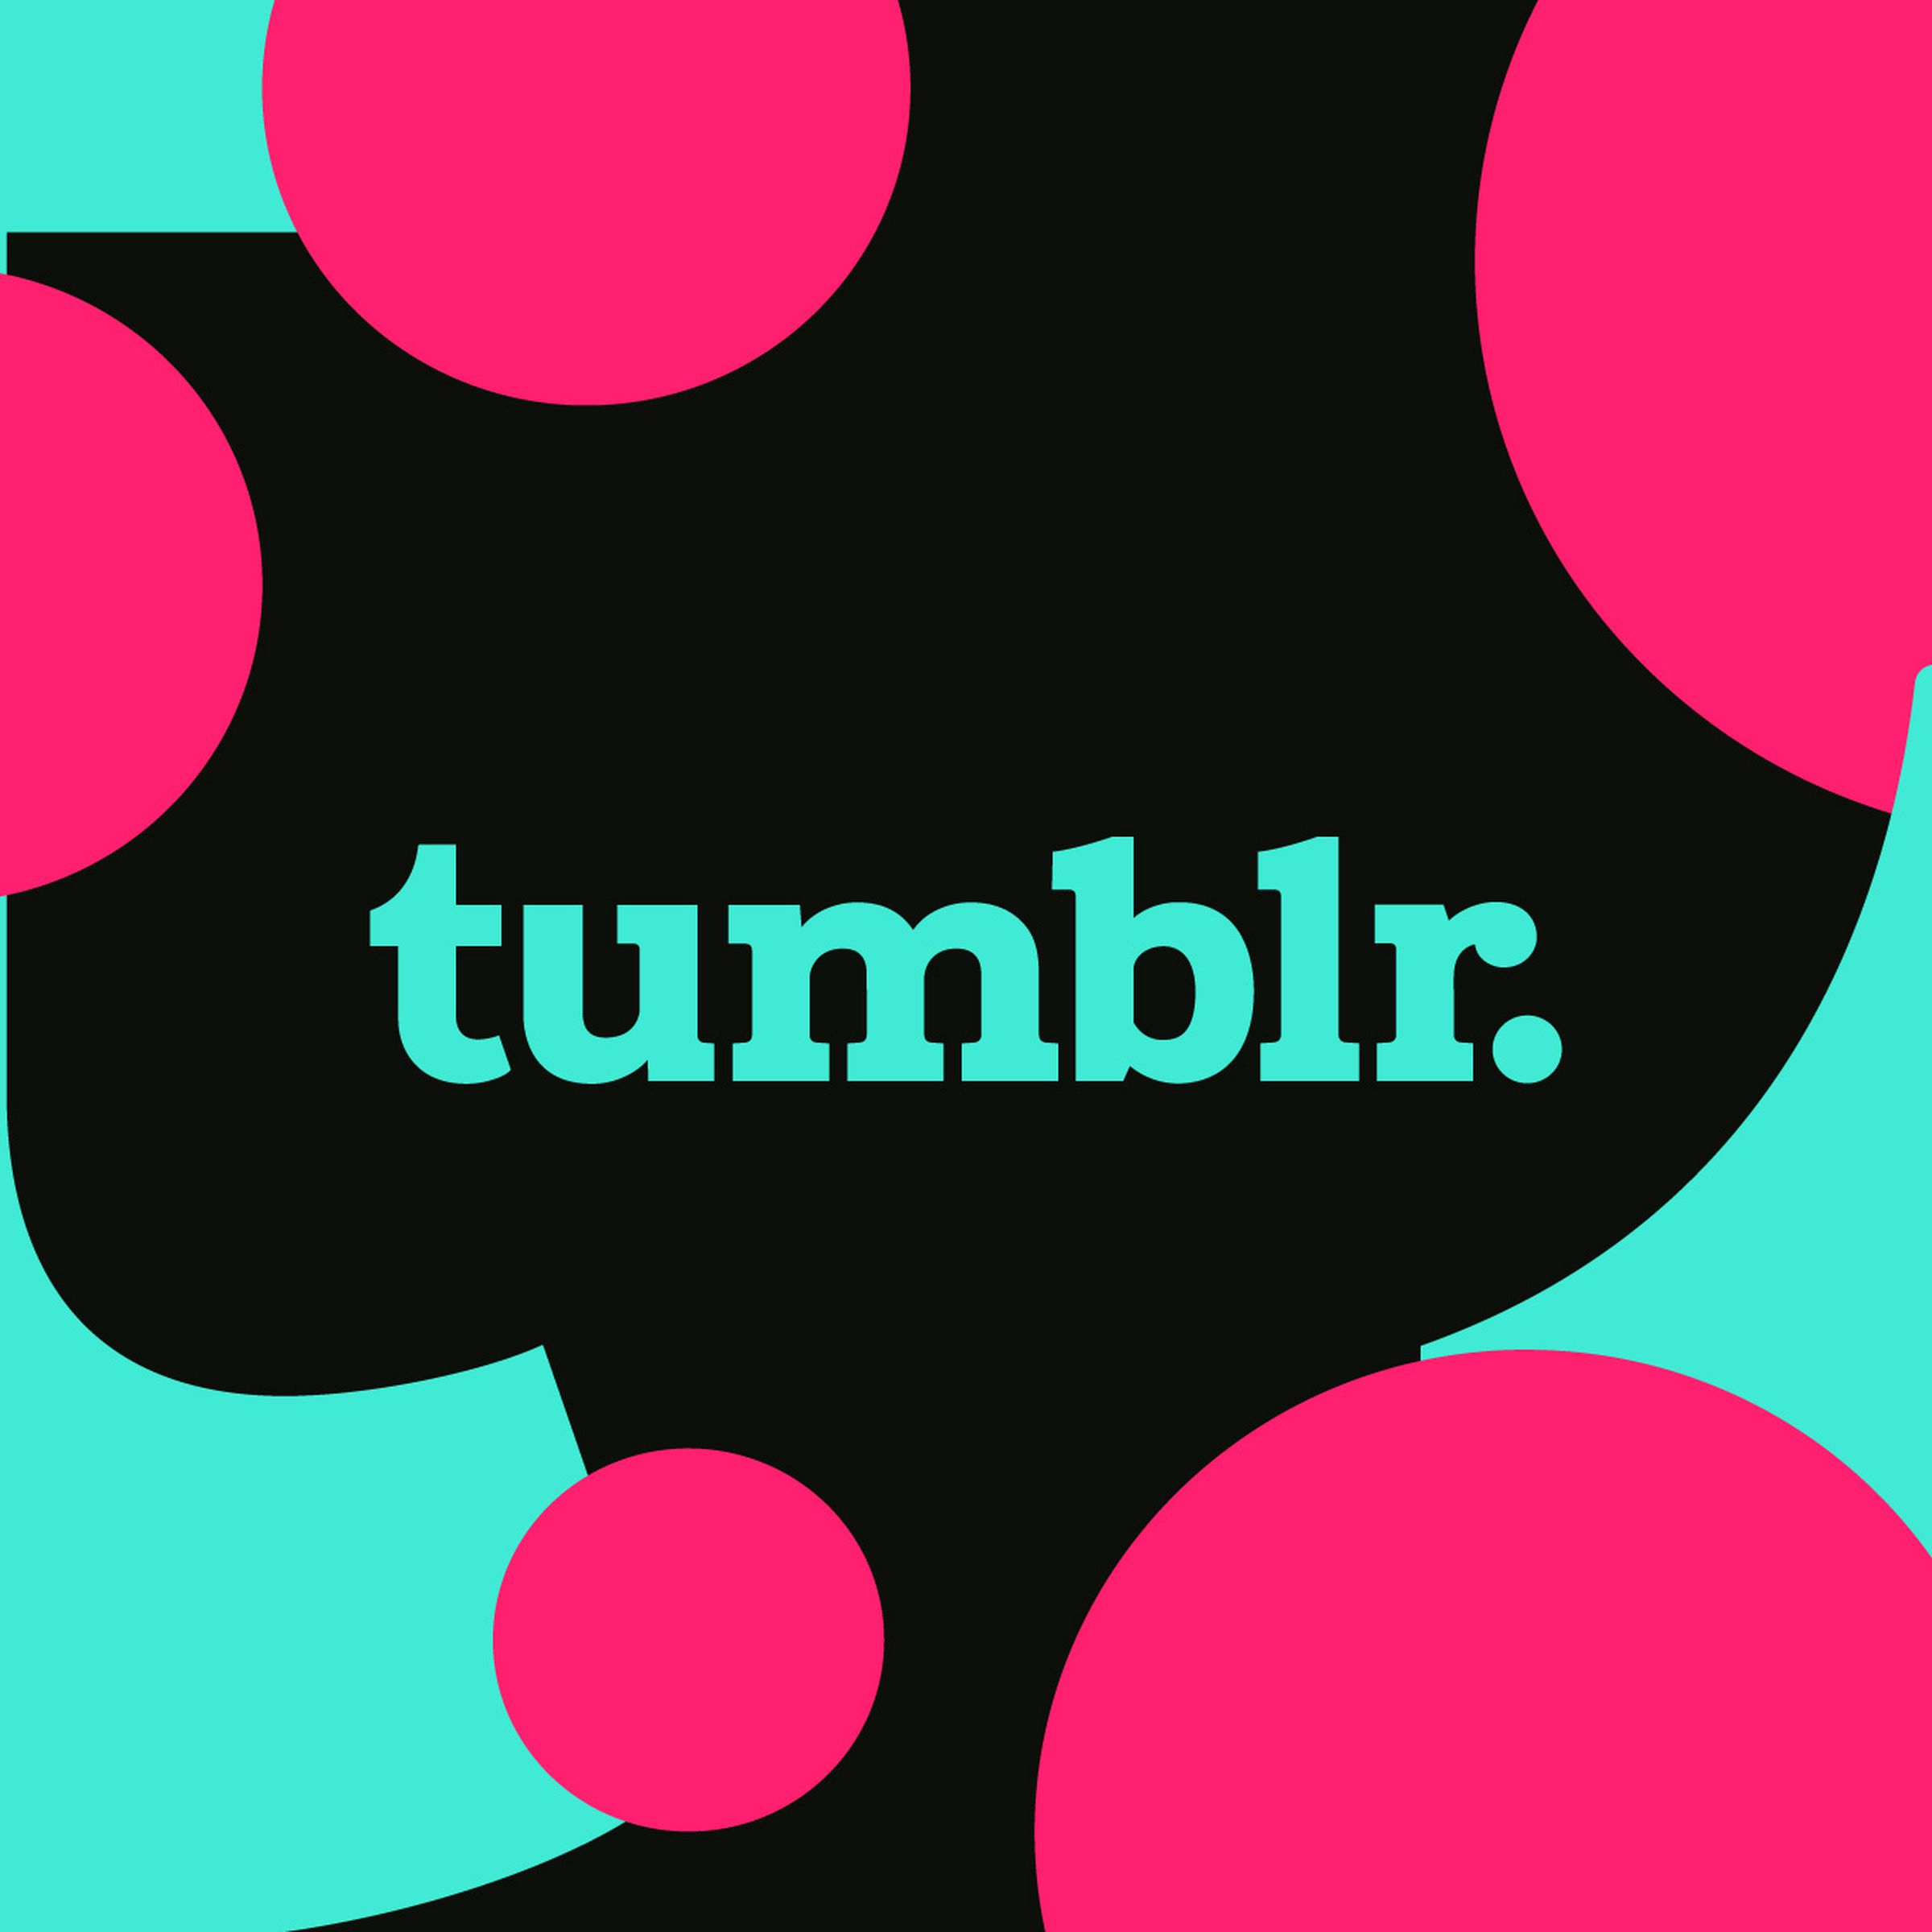 Illustration featuring the Tumblr wordmark logo